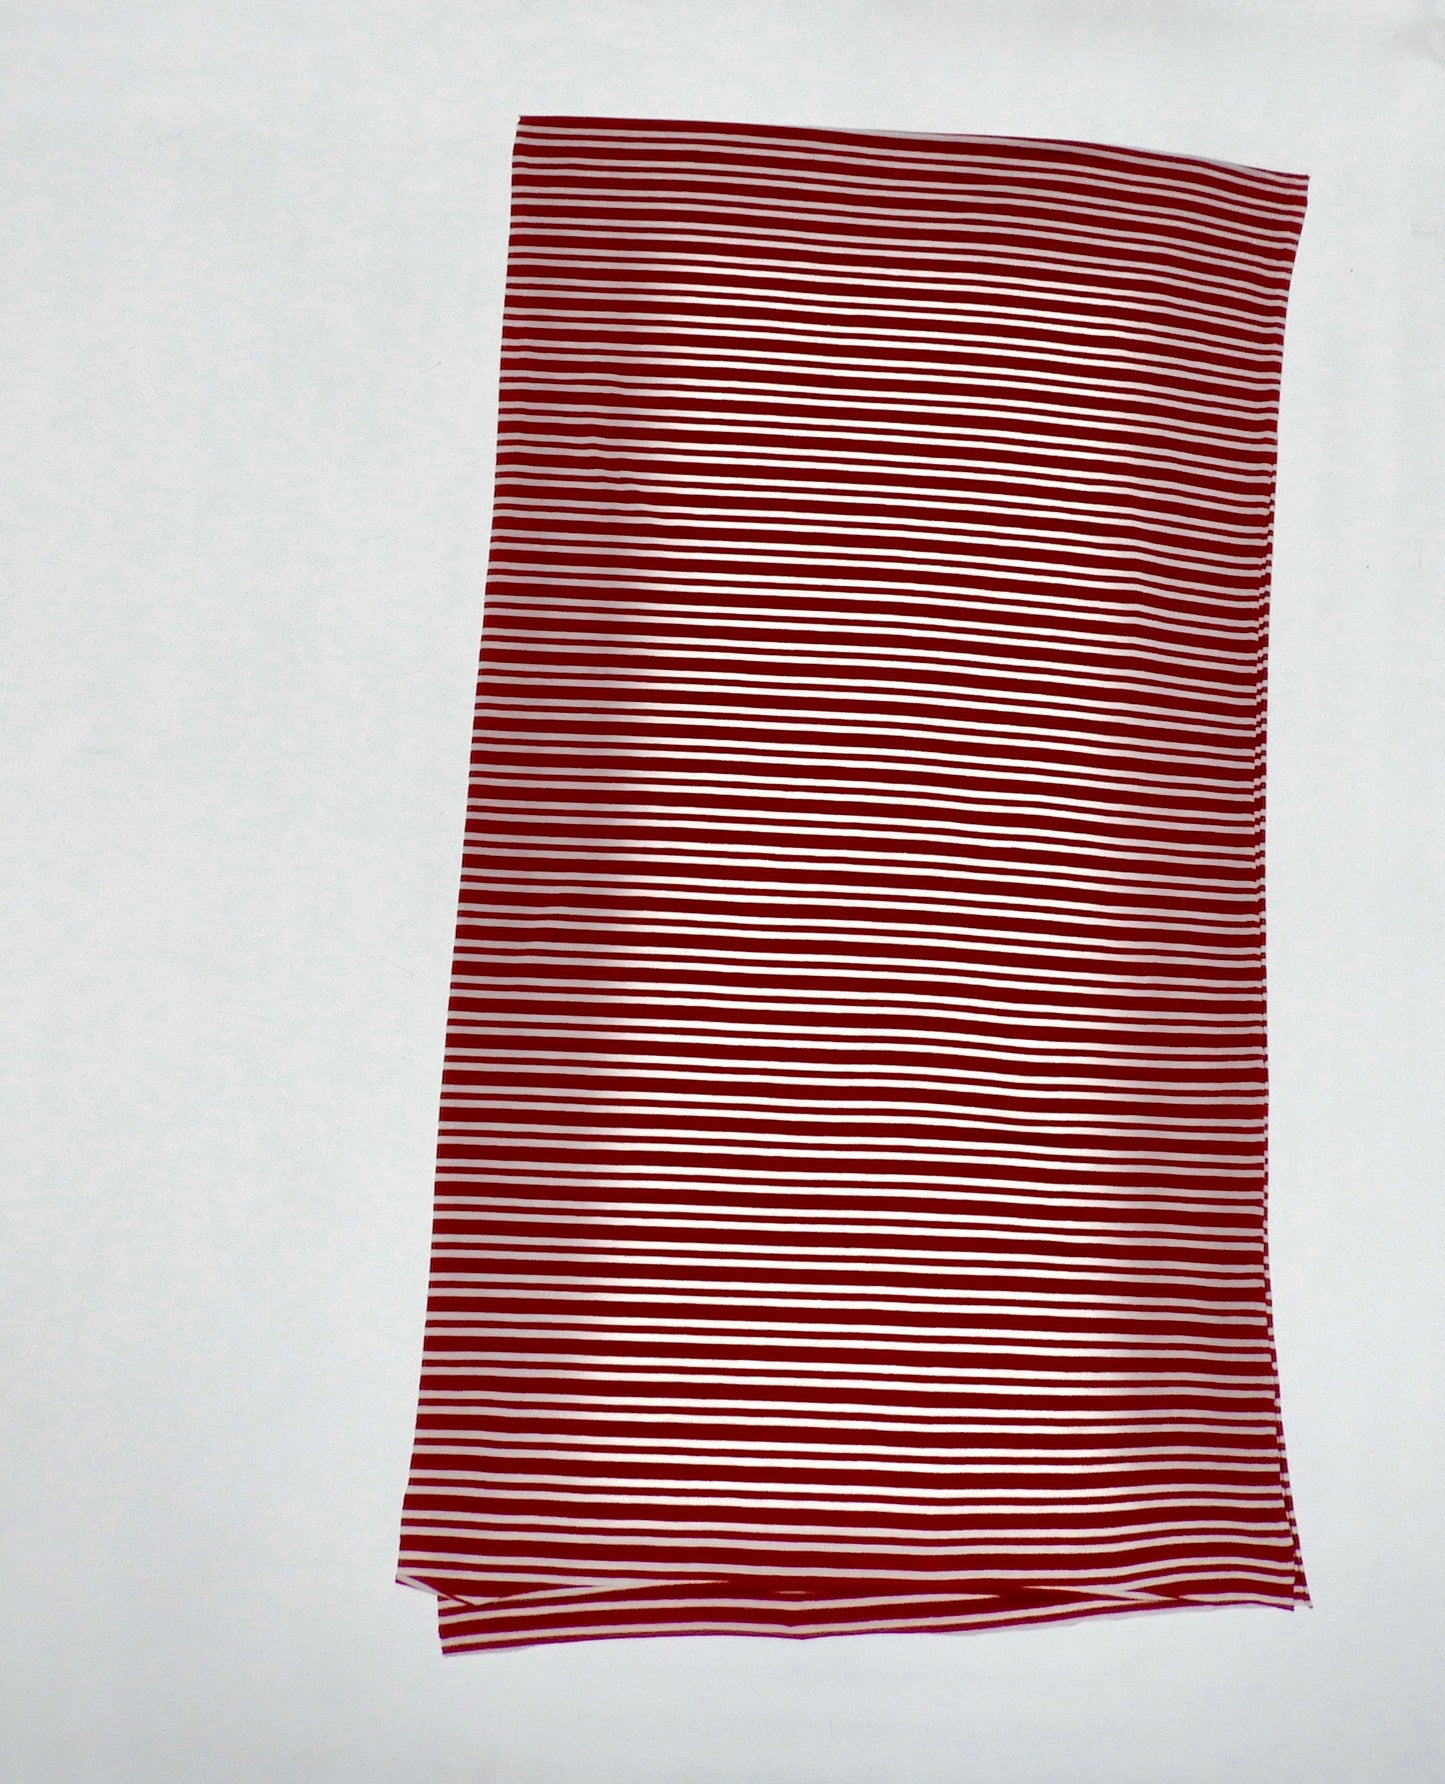 Taj Length Maroon & White Stripes (double length)